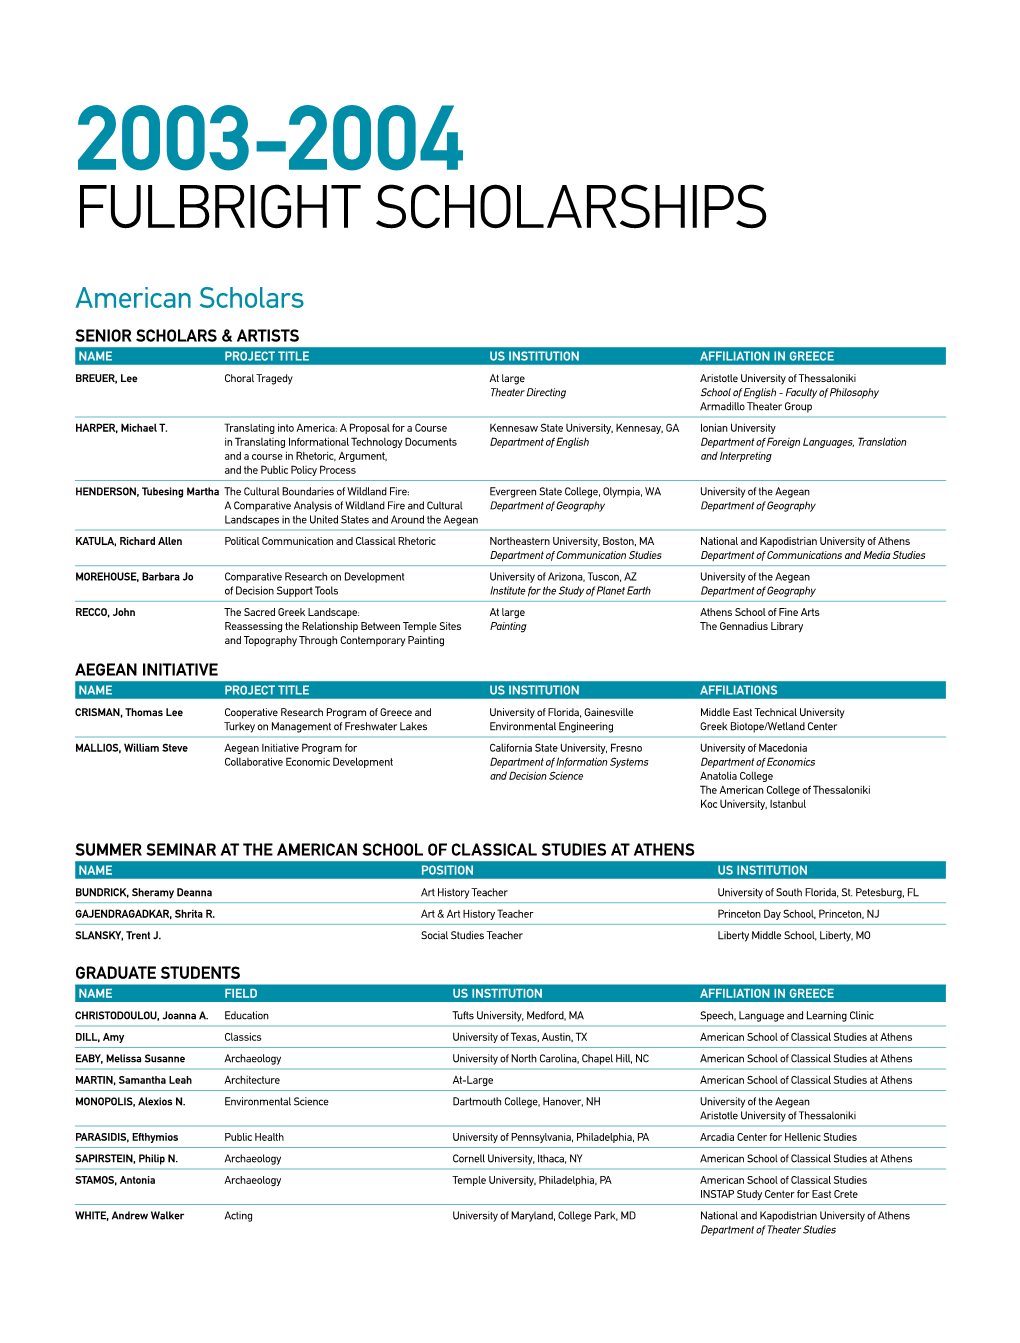 2003-2004 Fulbright Scholarships